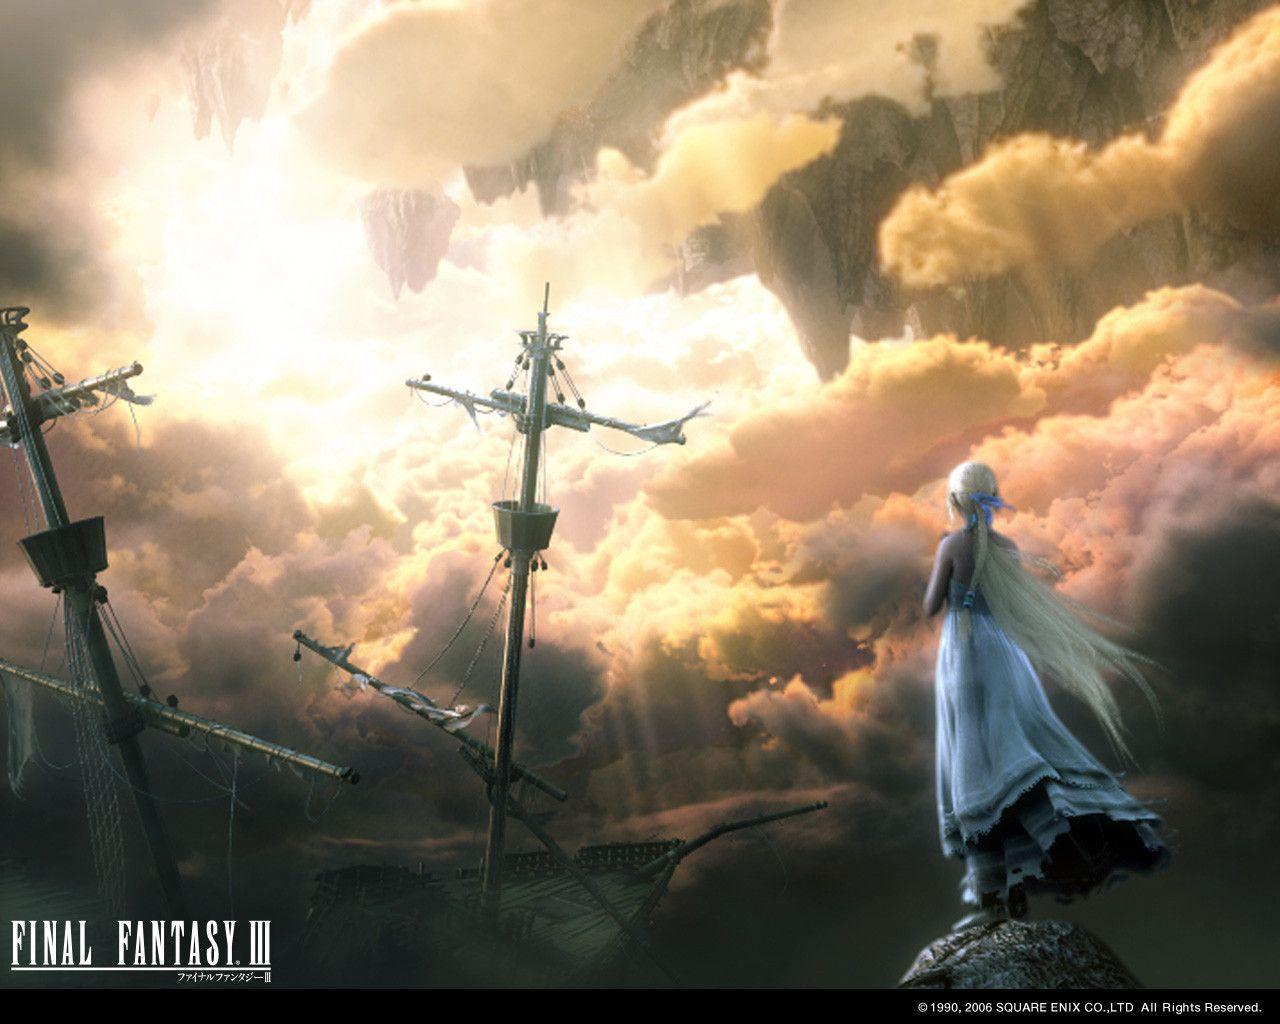 Final Fantasy III Wallpaper Final Fantasy Wiki has more